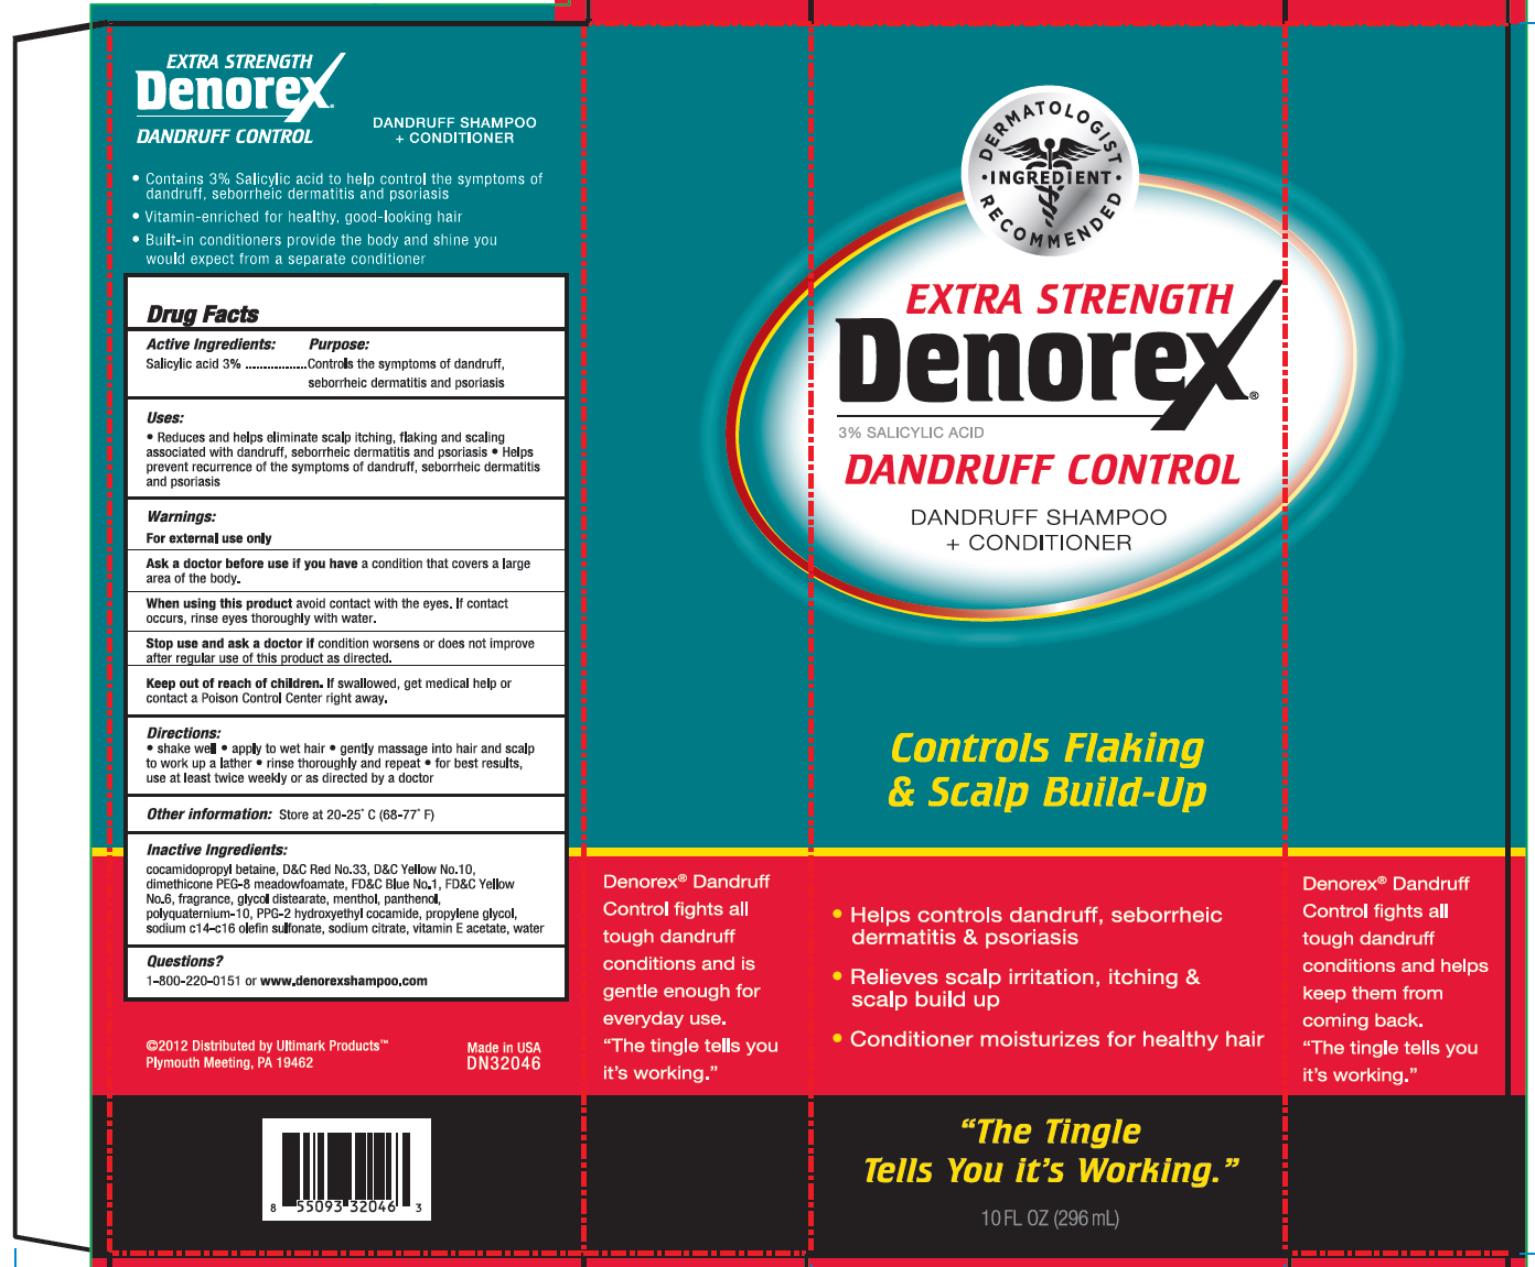 EXTRA STRENGTH DENOREX
3 % Salicylic Acid
DANDRUFF Control
SHAMPOO +
CONDITIONER
10 FL OZ (296 mL)
